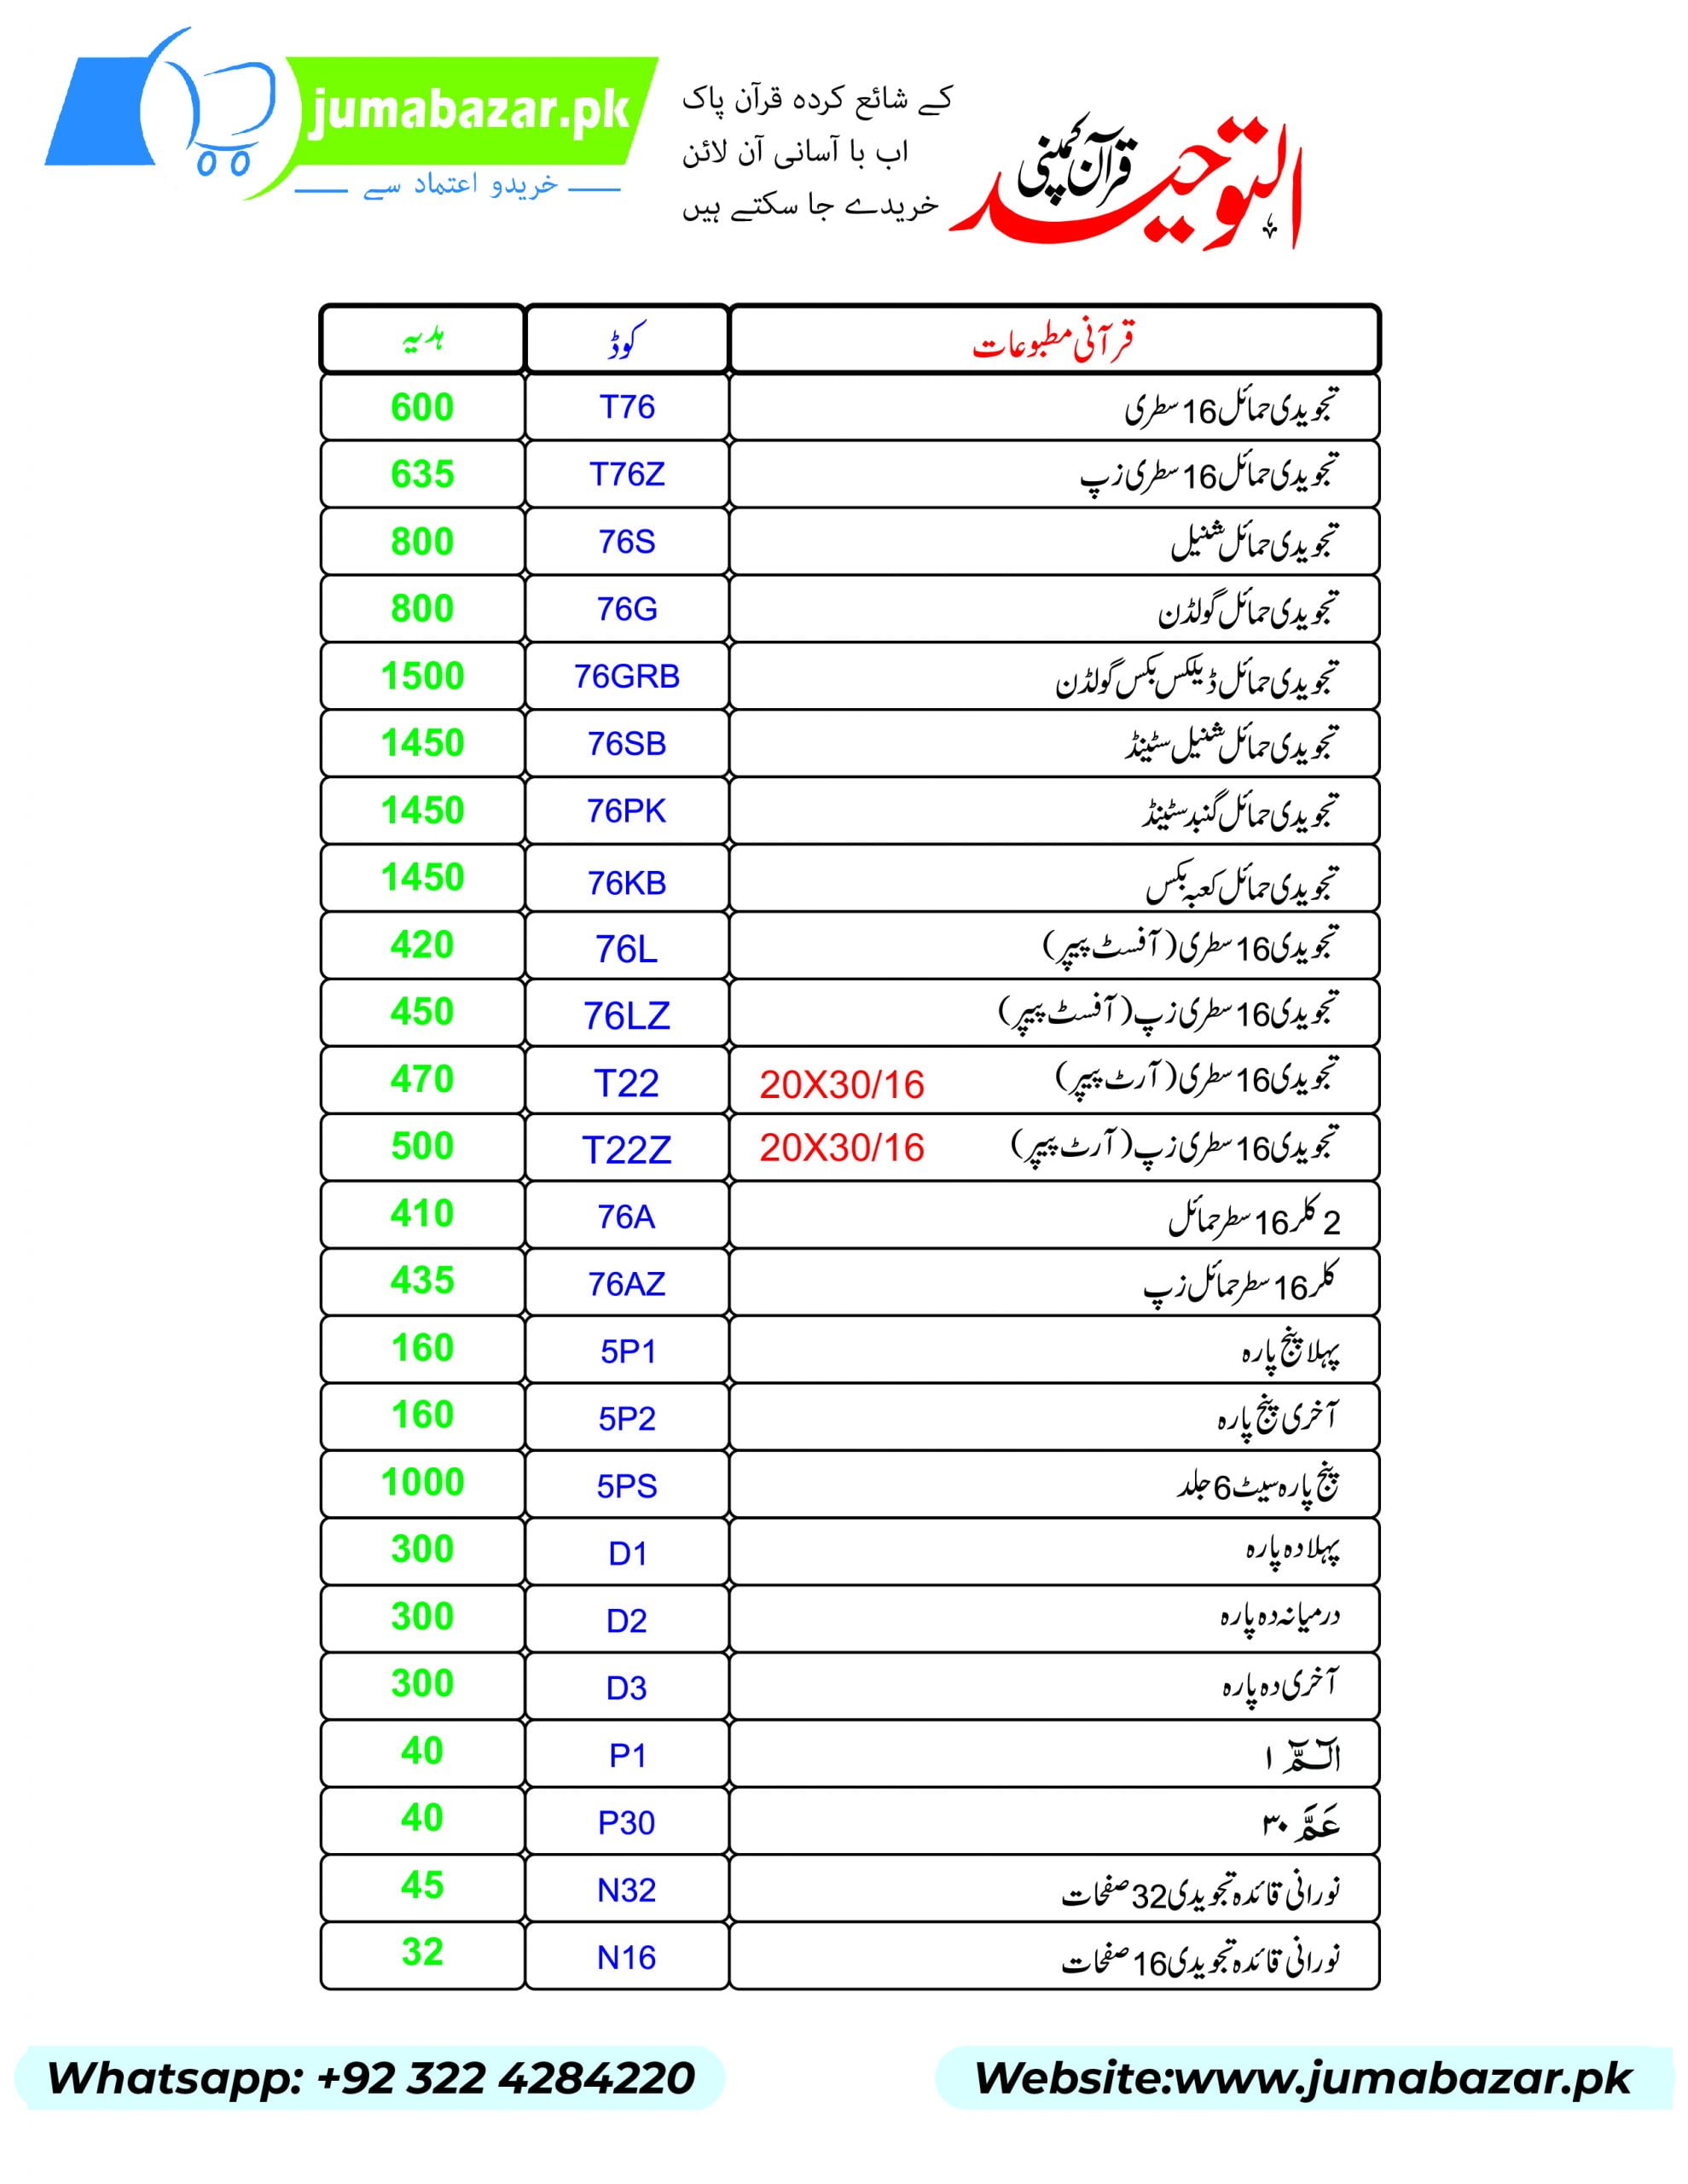 al touheed quran company price list Jumabazar 01 scaled jumabazar - Blog